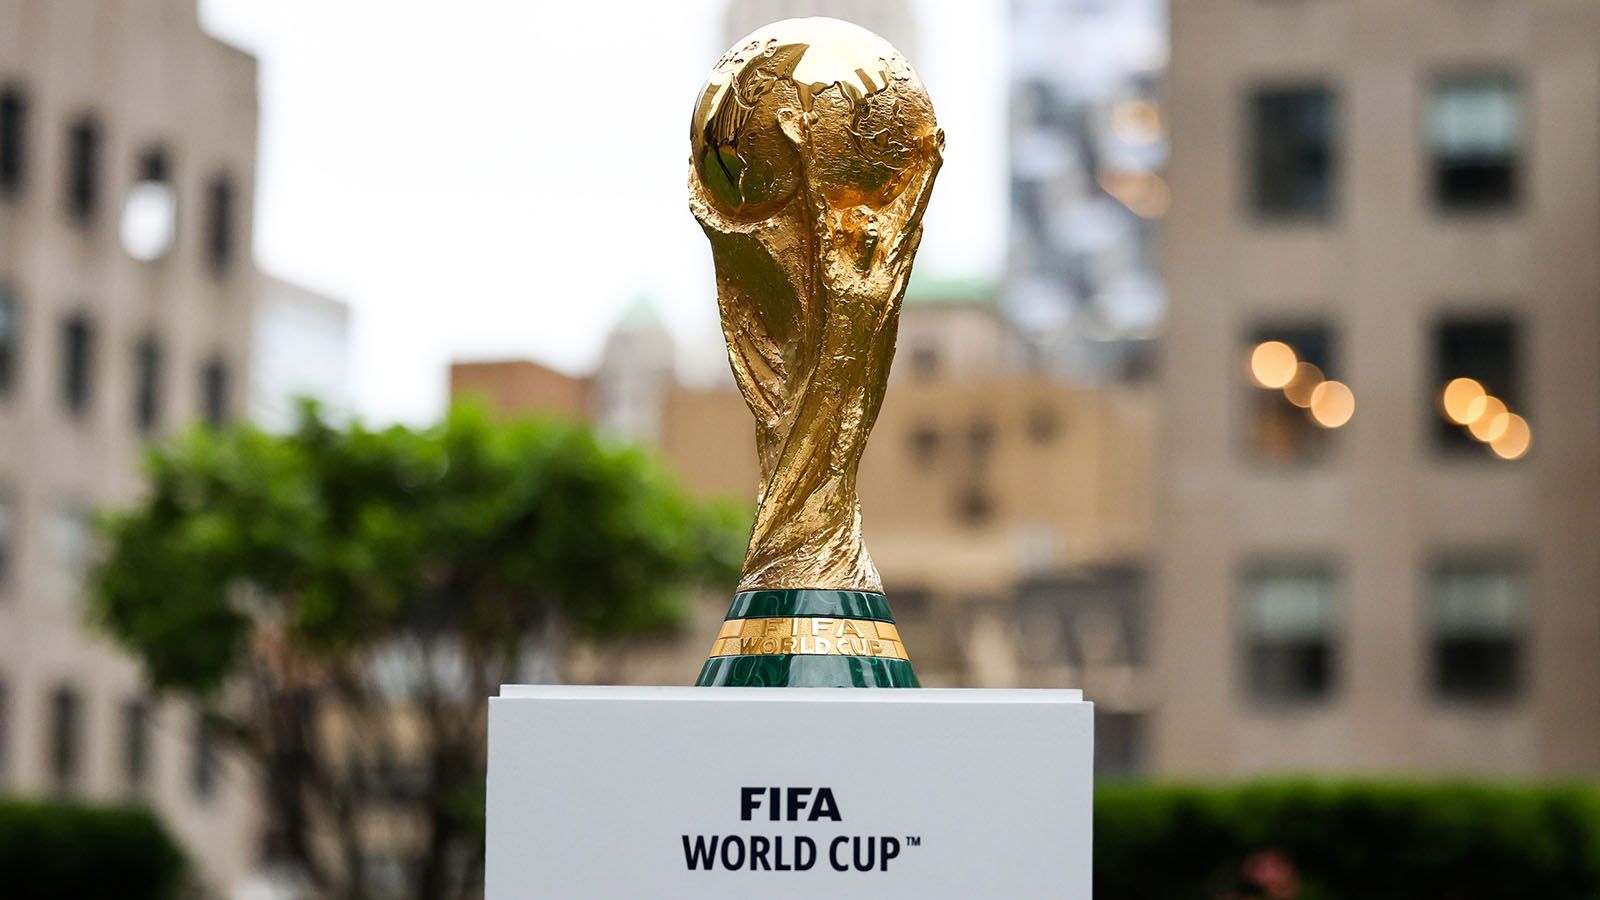 tubi fifa world cup